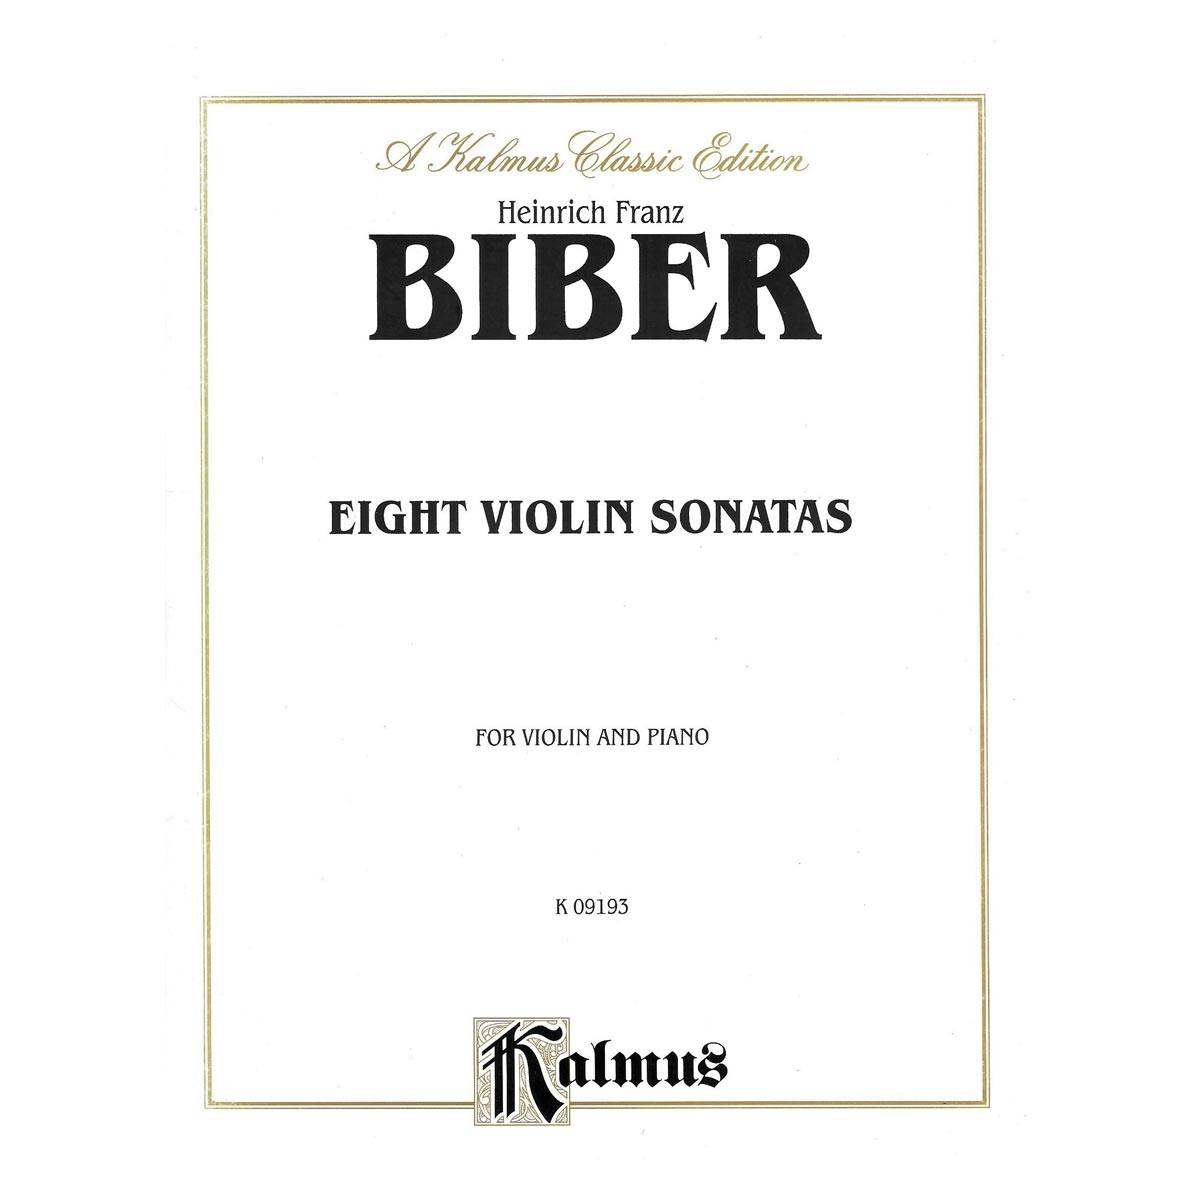 Biber - Eight Violin Sonatas